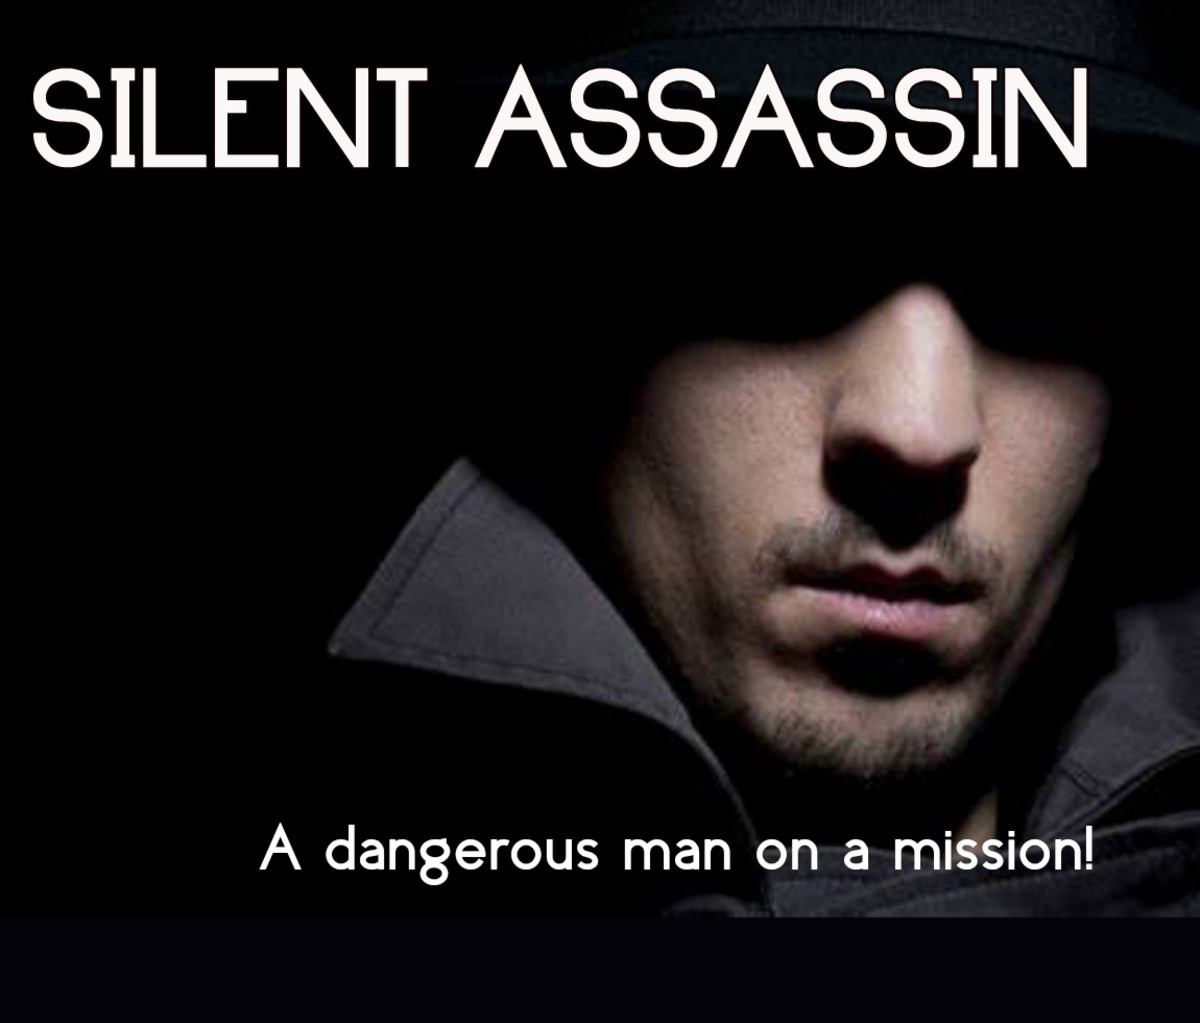 The assassin may be looking at new victims!